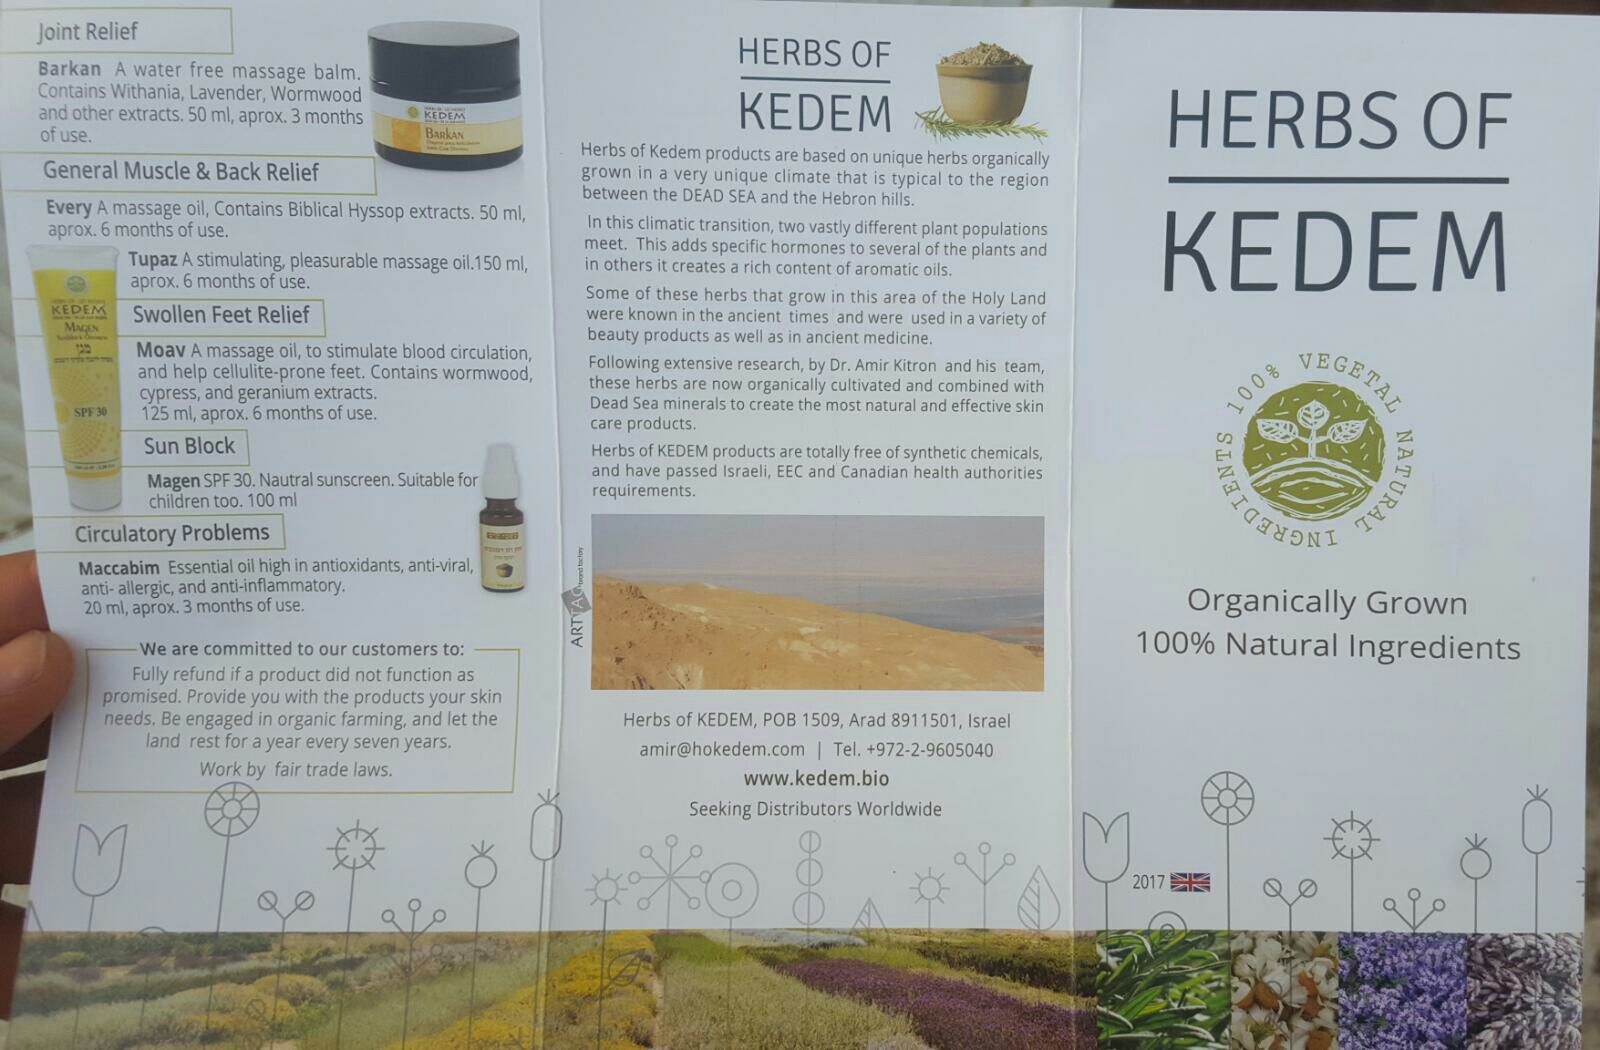 A shortened catalogue - Herbs of Kedem